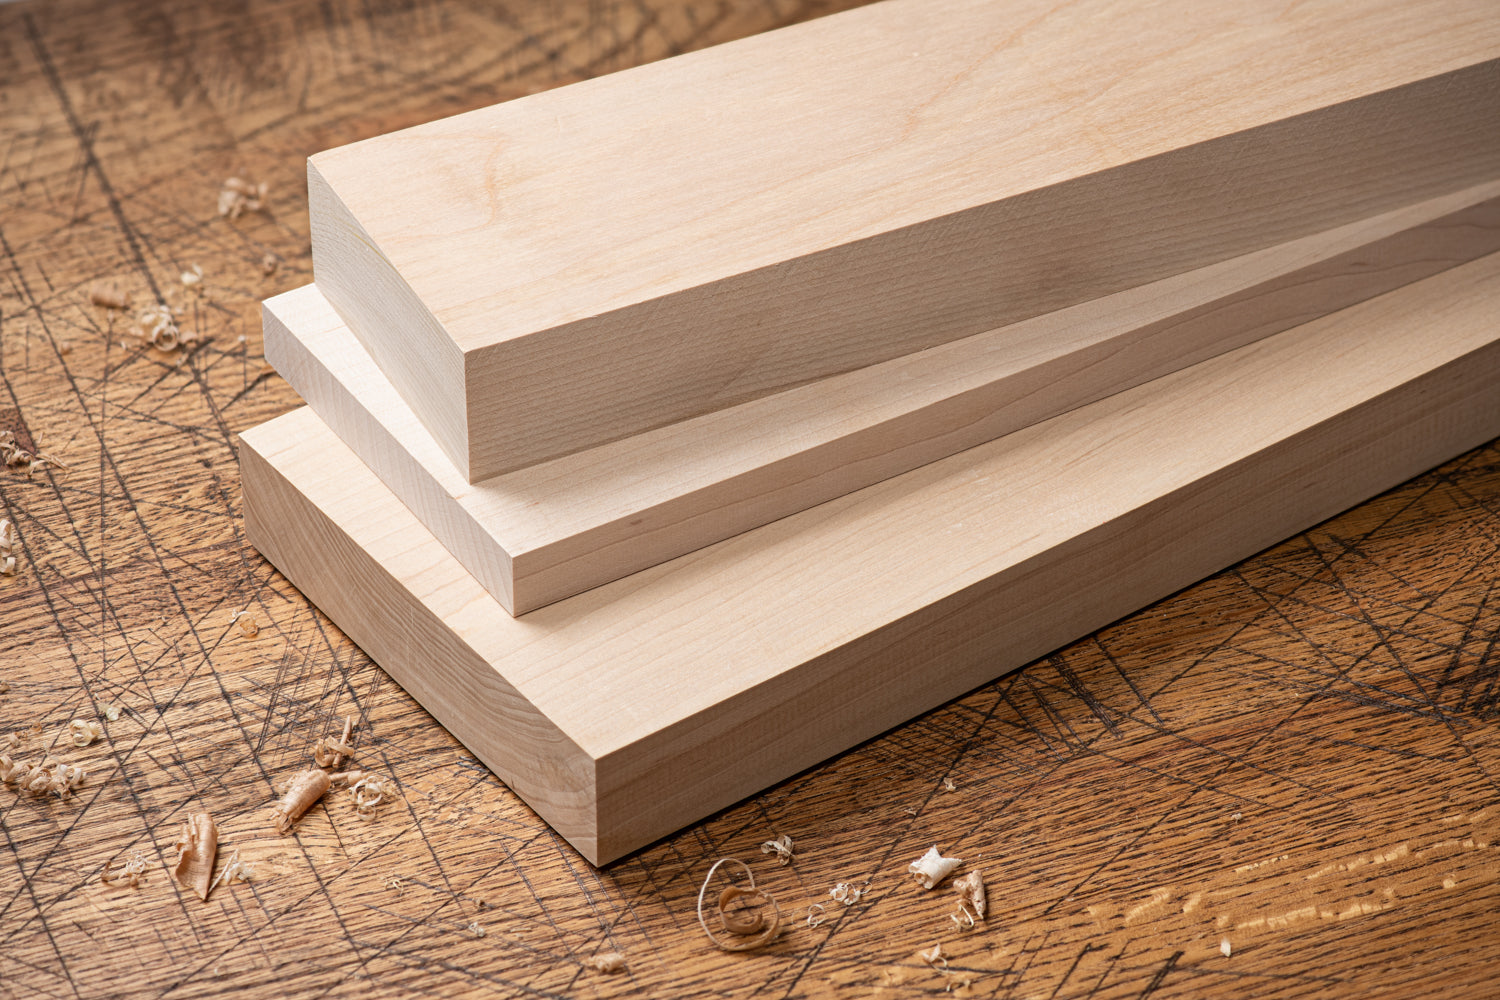 4/4 (13/16) Hard Maple - Dimensional Lumber